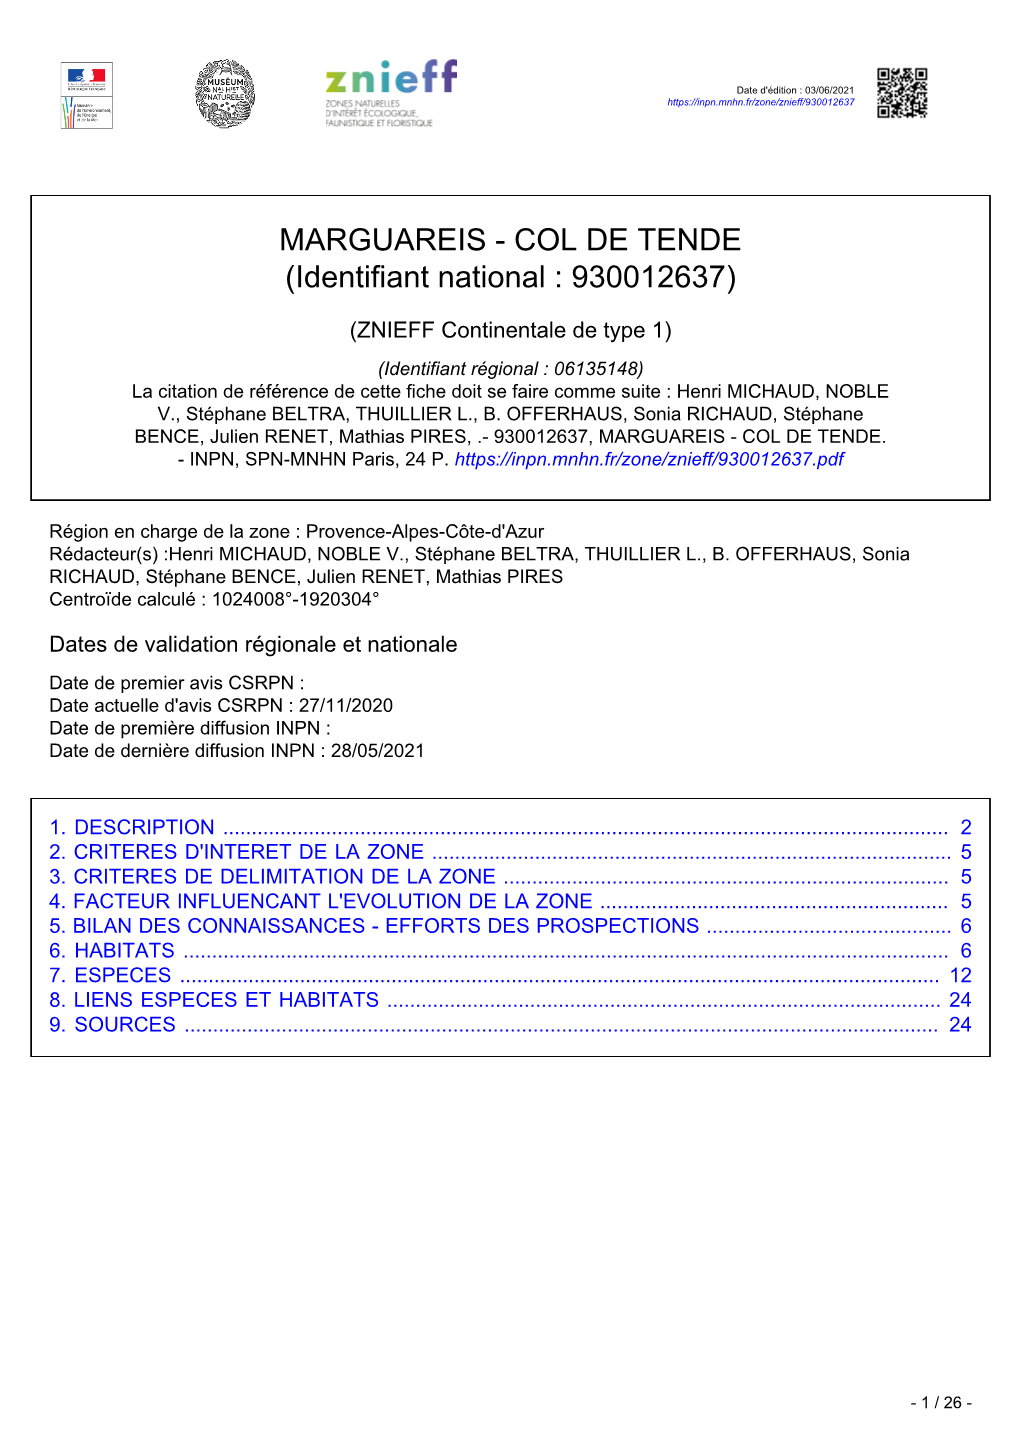 MARGUAREIS - COL DE TENDE (Identifiant National : 930012637)